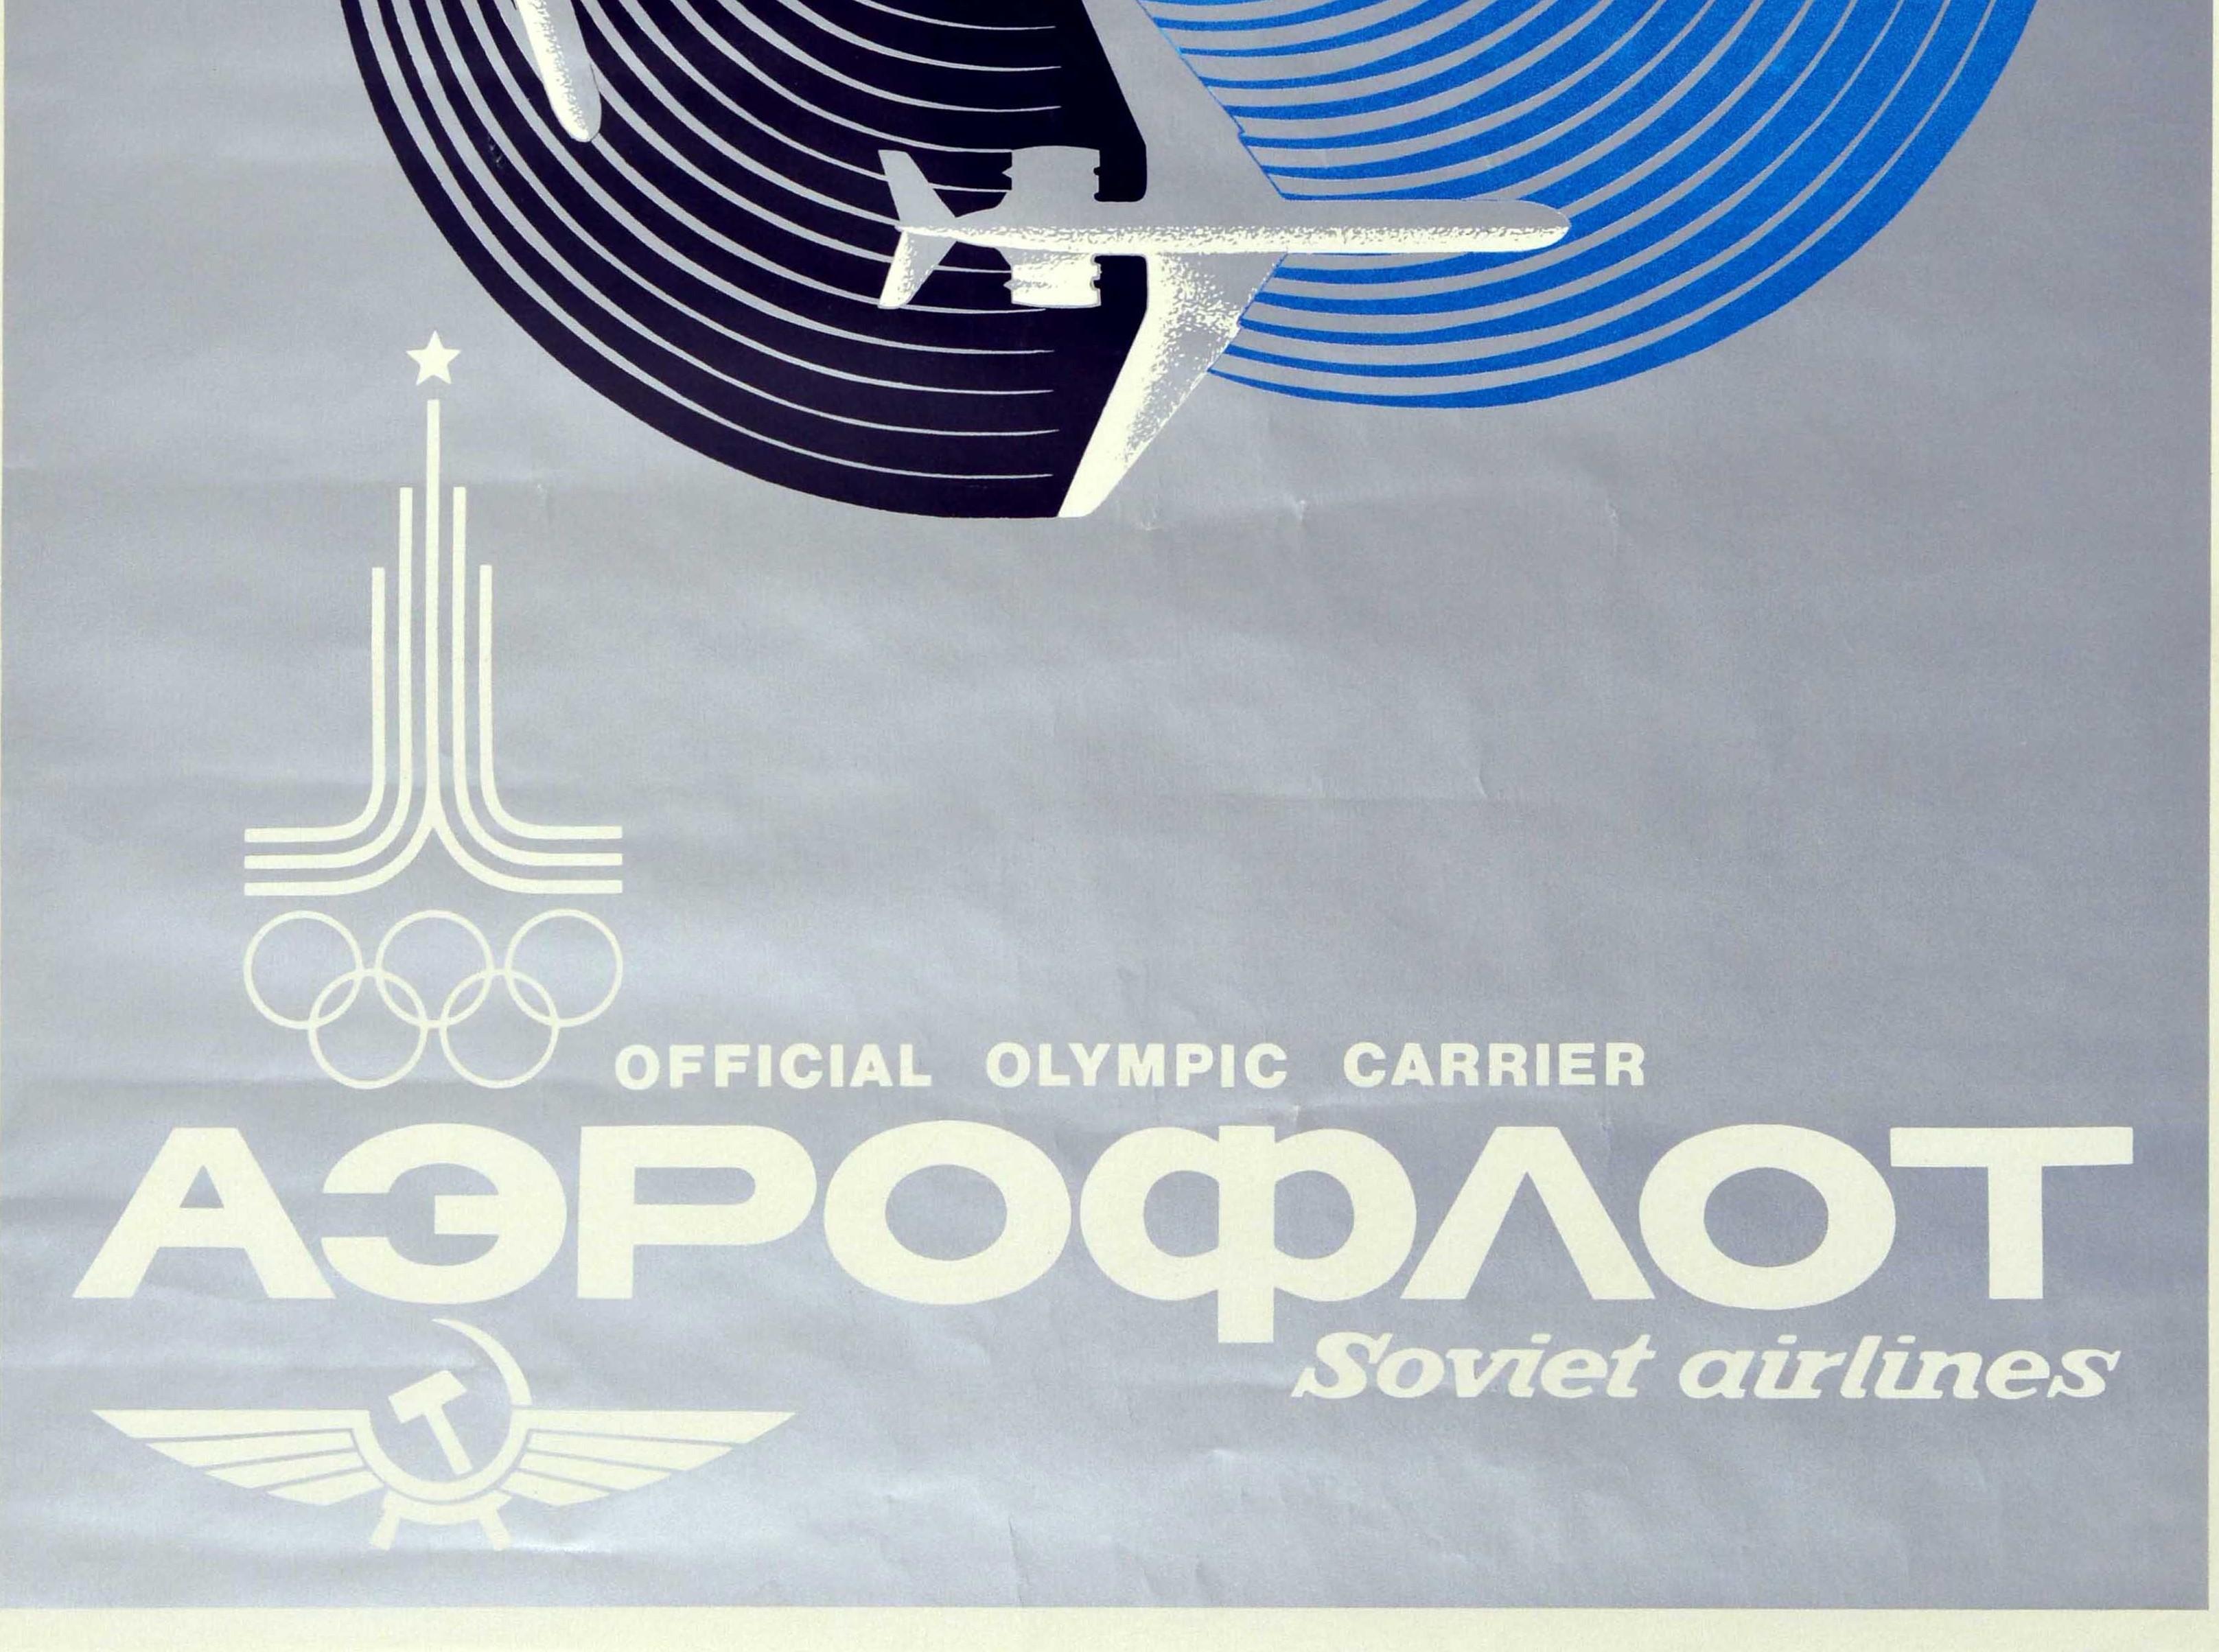 aeroflot vintage poster